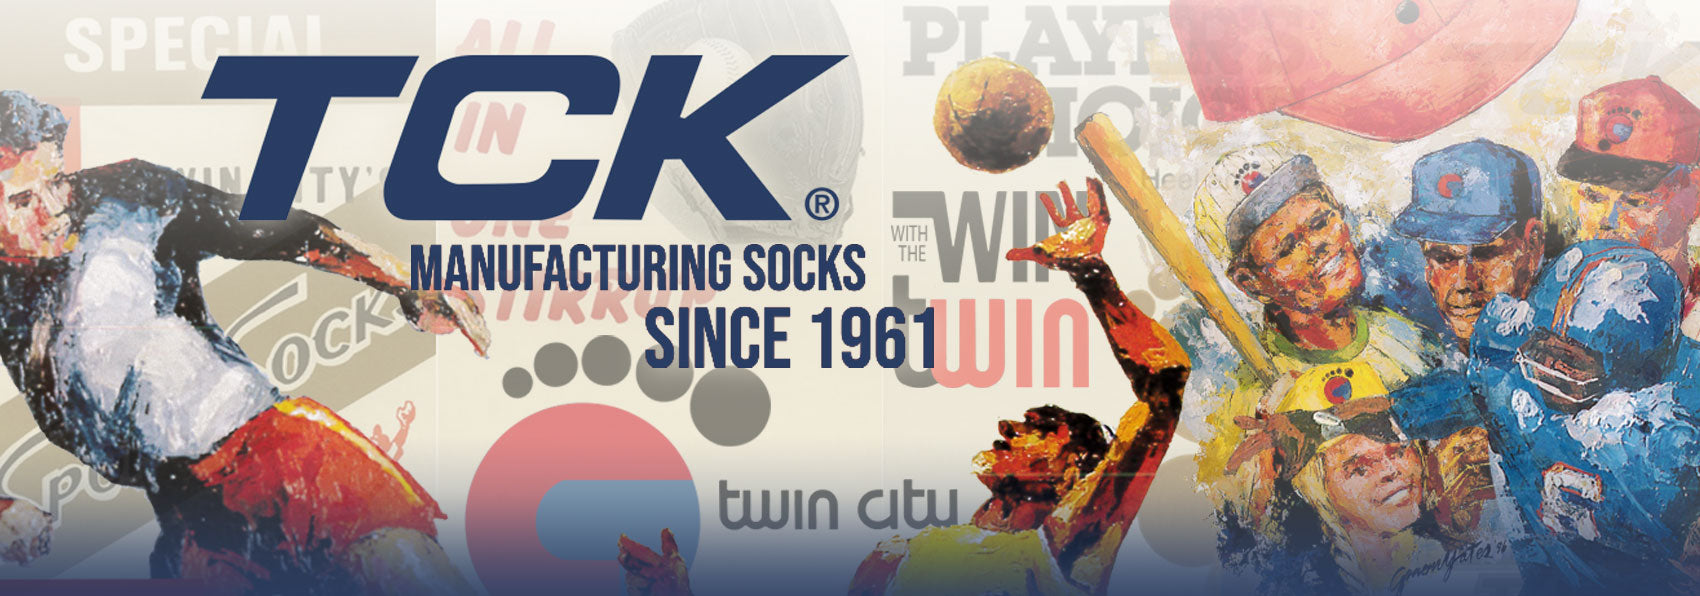 TCK (Twin City Knitting) Manufacturing Socks Since 1961